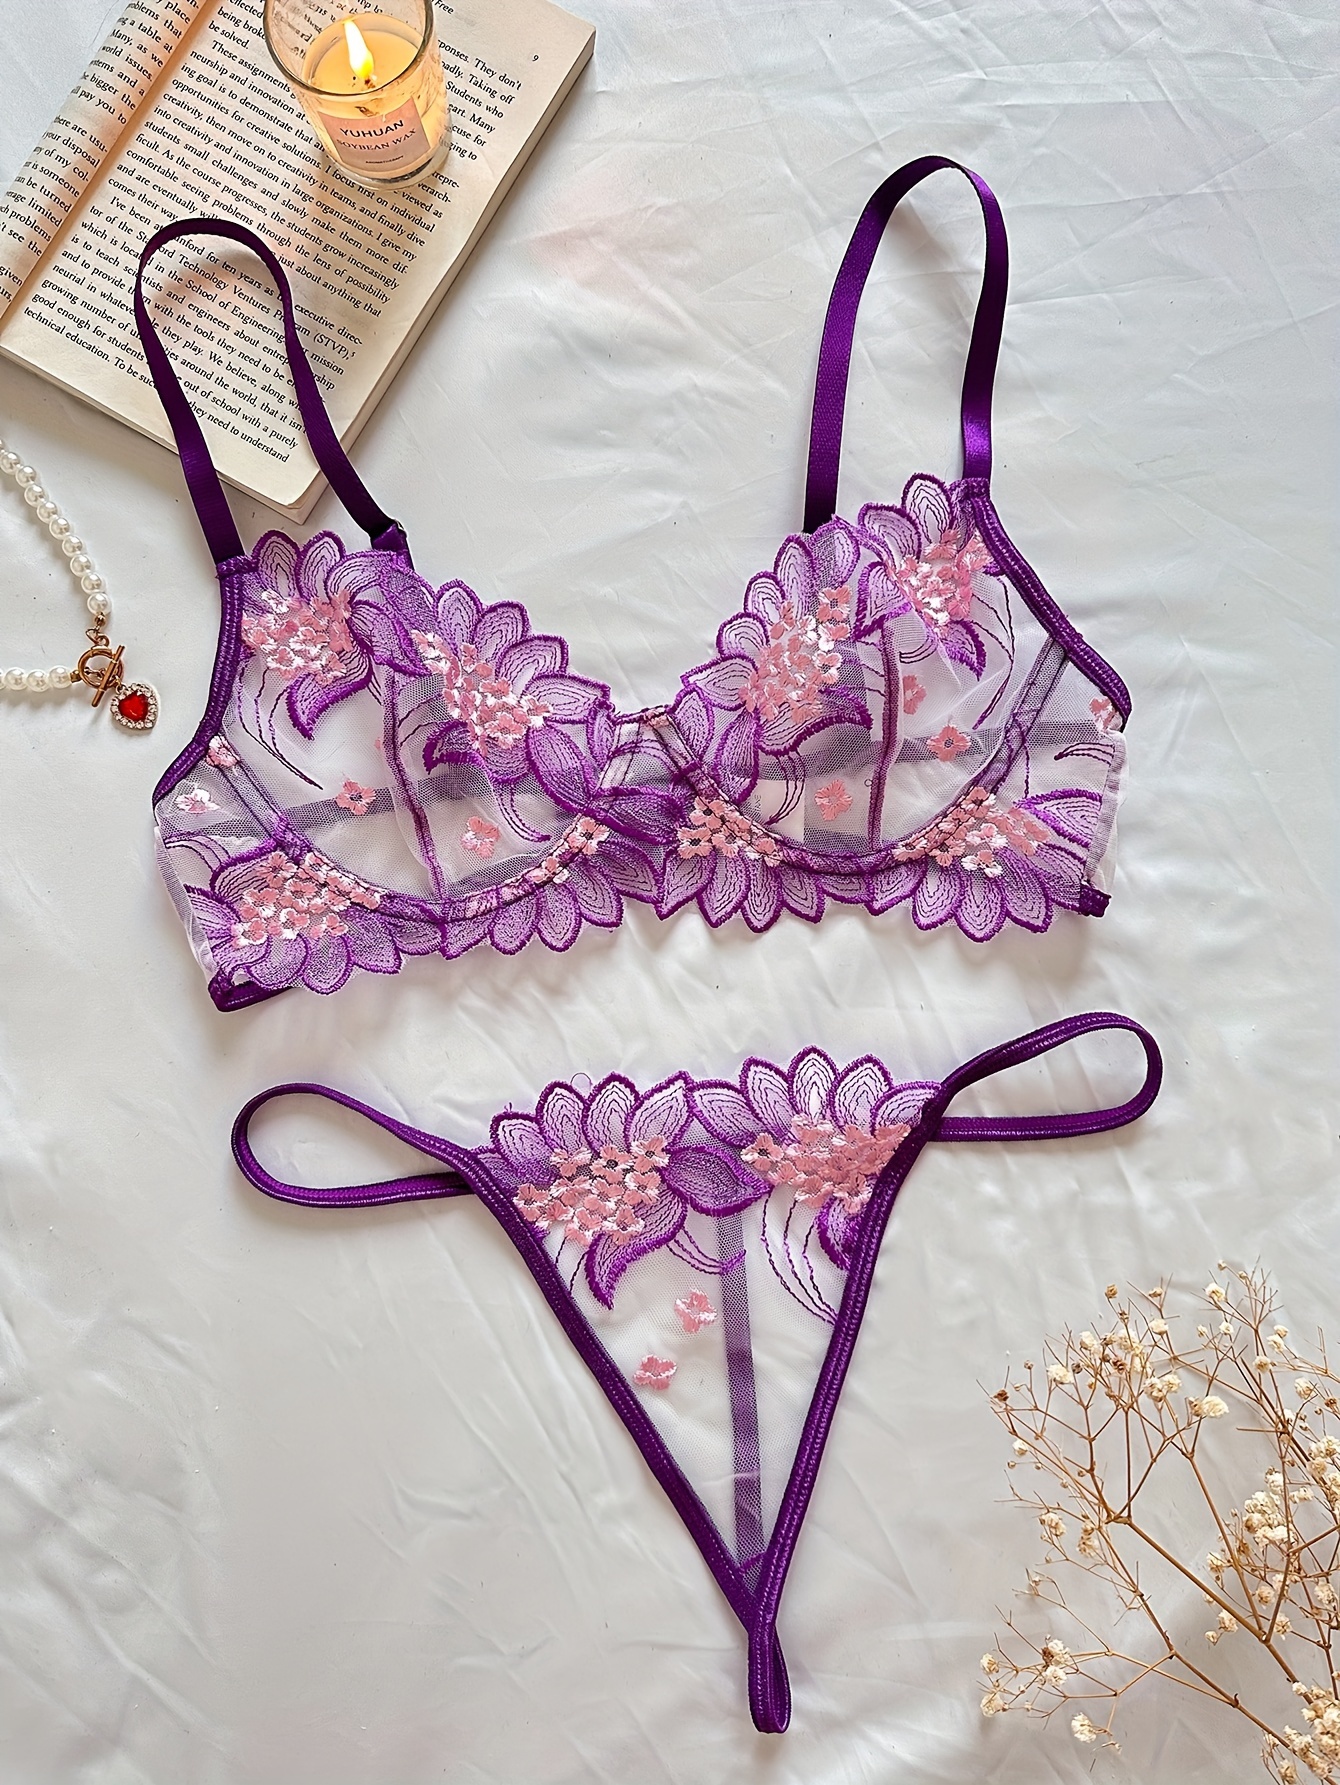 Buy LotusLeaf Women's Floral Lace Satin Wirefree Padded Honeymoon Lingerie Bra  Panty Set (Purple,36C) at